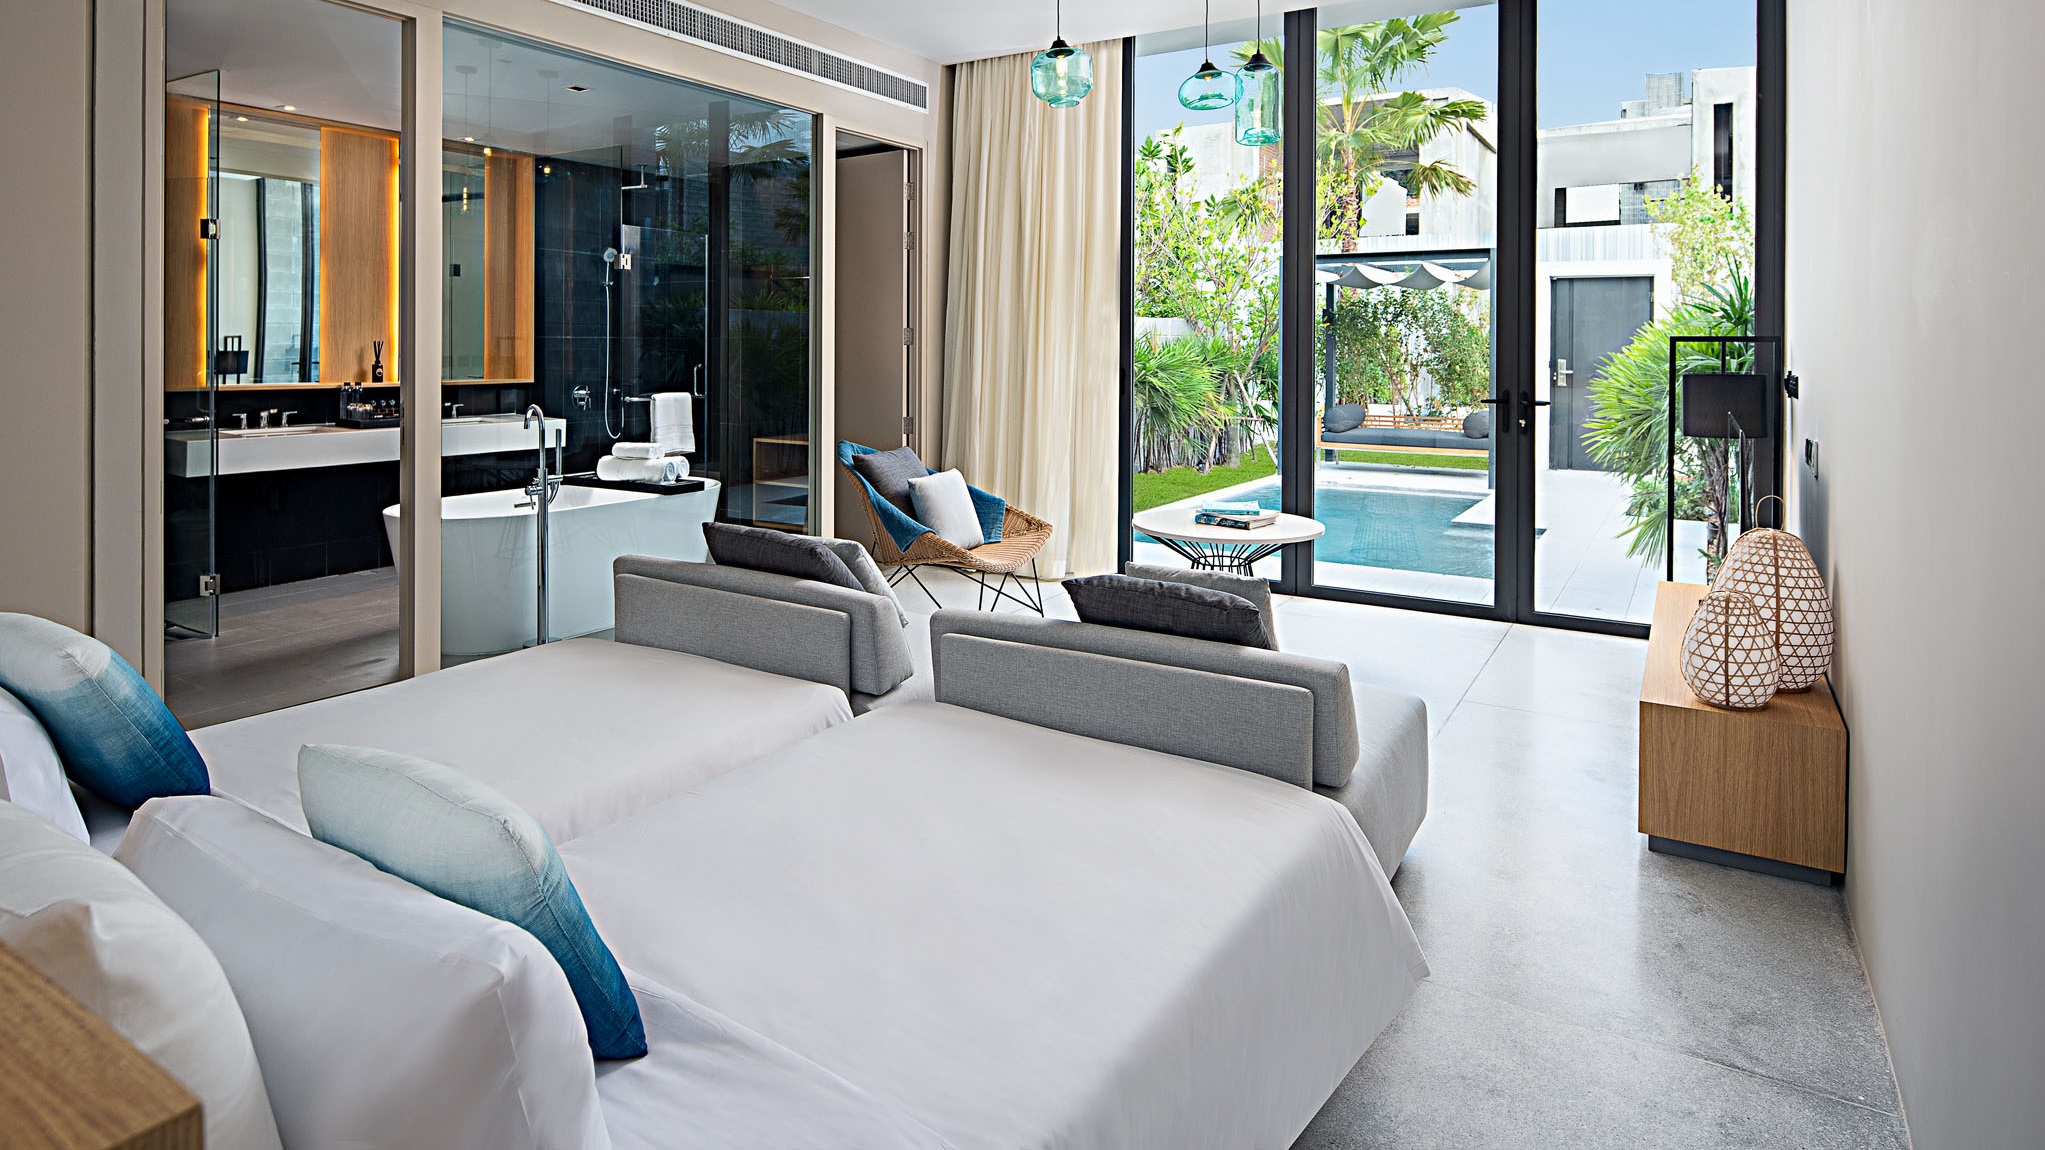 X2 Pattaya Oceanphere X2 Resorts ครอสทู พัทยา โอเชียนเฟียร์ ที่พัก ที่พัก พัทยา ที่พักพูลวิลล่า พูลวิลล่า รีสอร์ท รีสอร์ท พัทยา